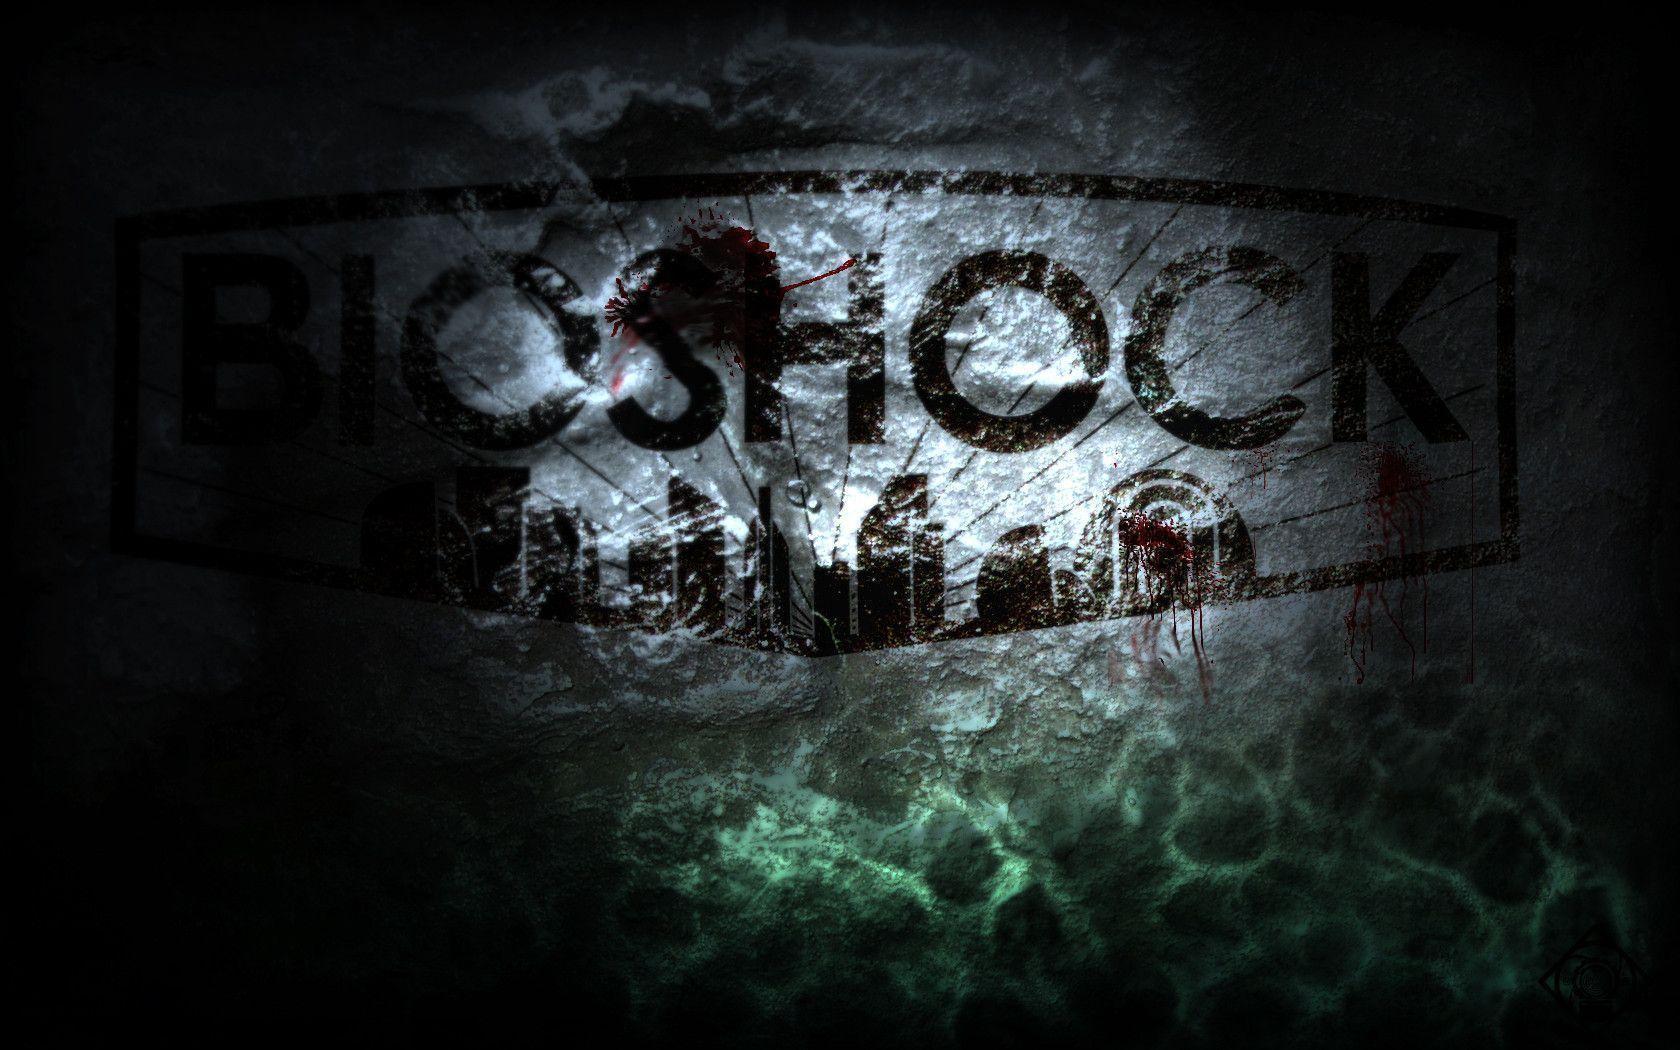 BioShock 17 323125 Image HD Wallpaper. Wallfoy.com